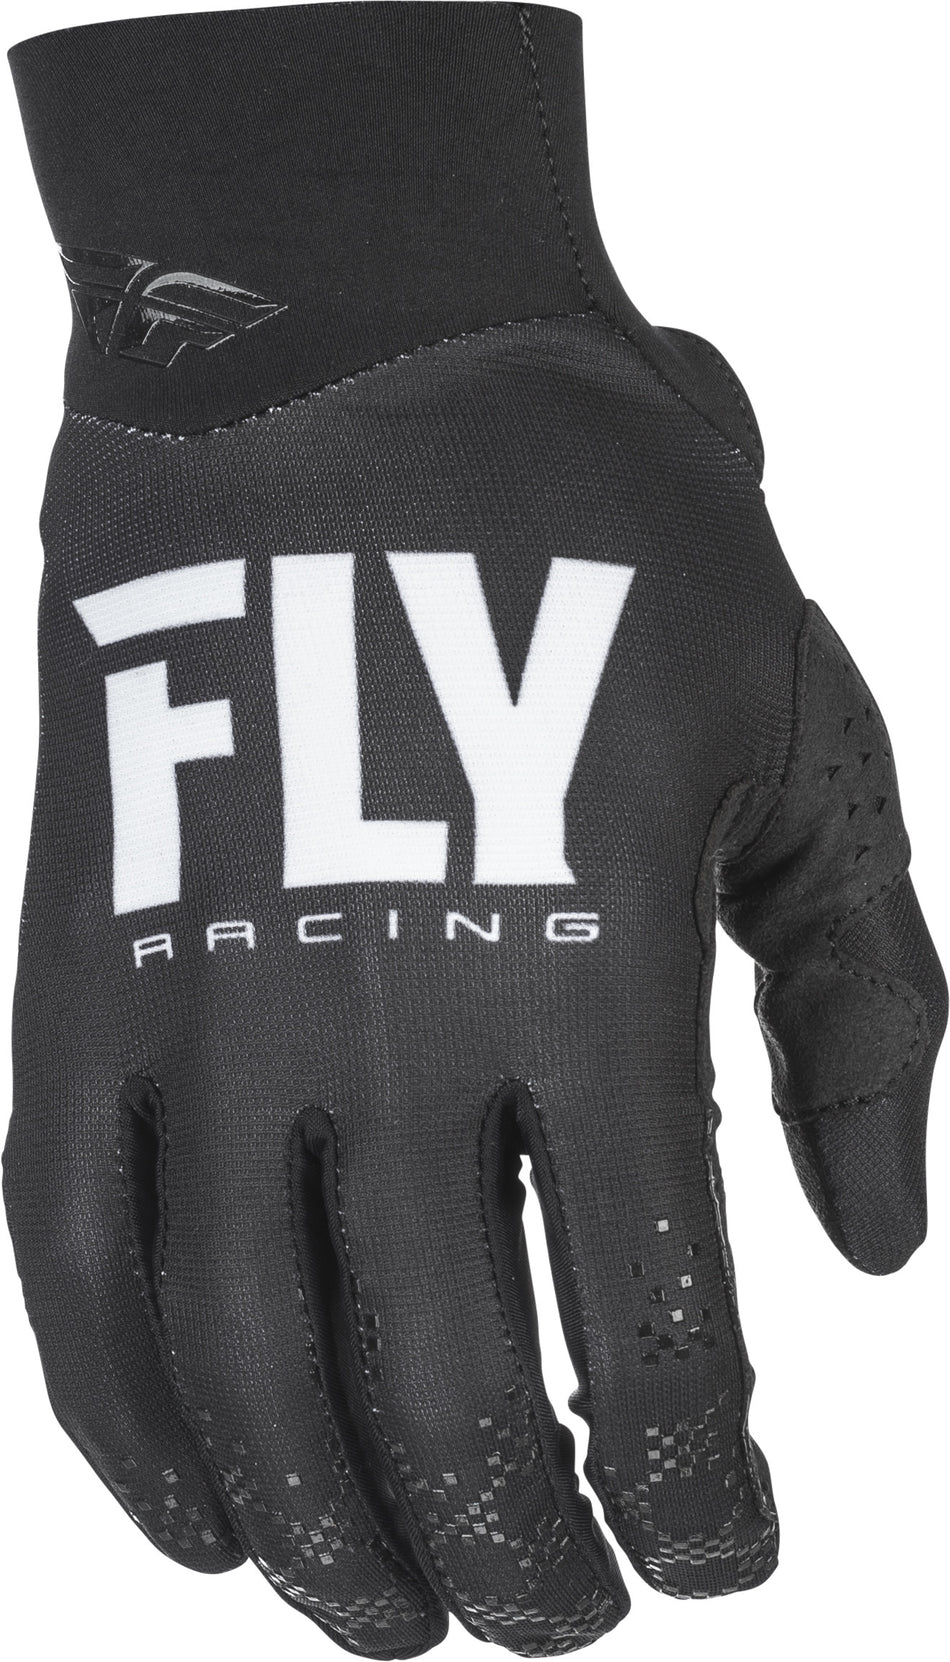 FLY RACING Pro Lite Gloves Black Sz 10 371-81010